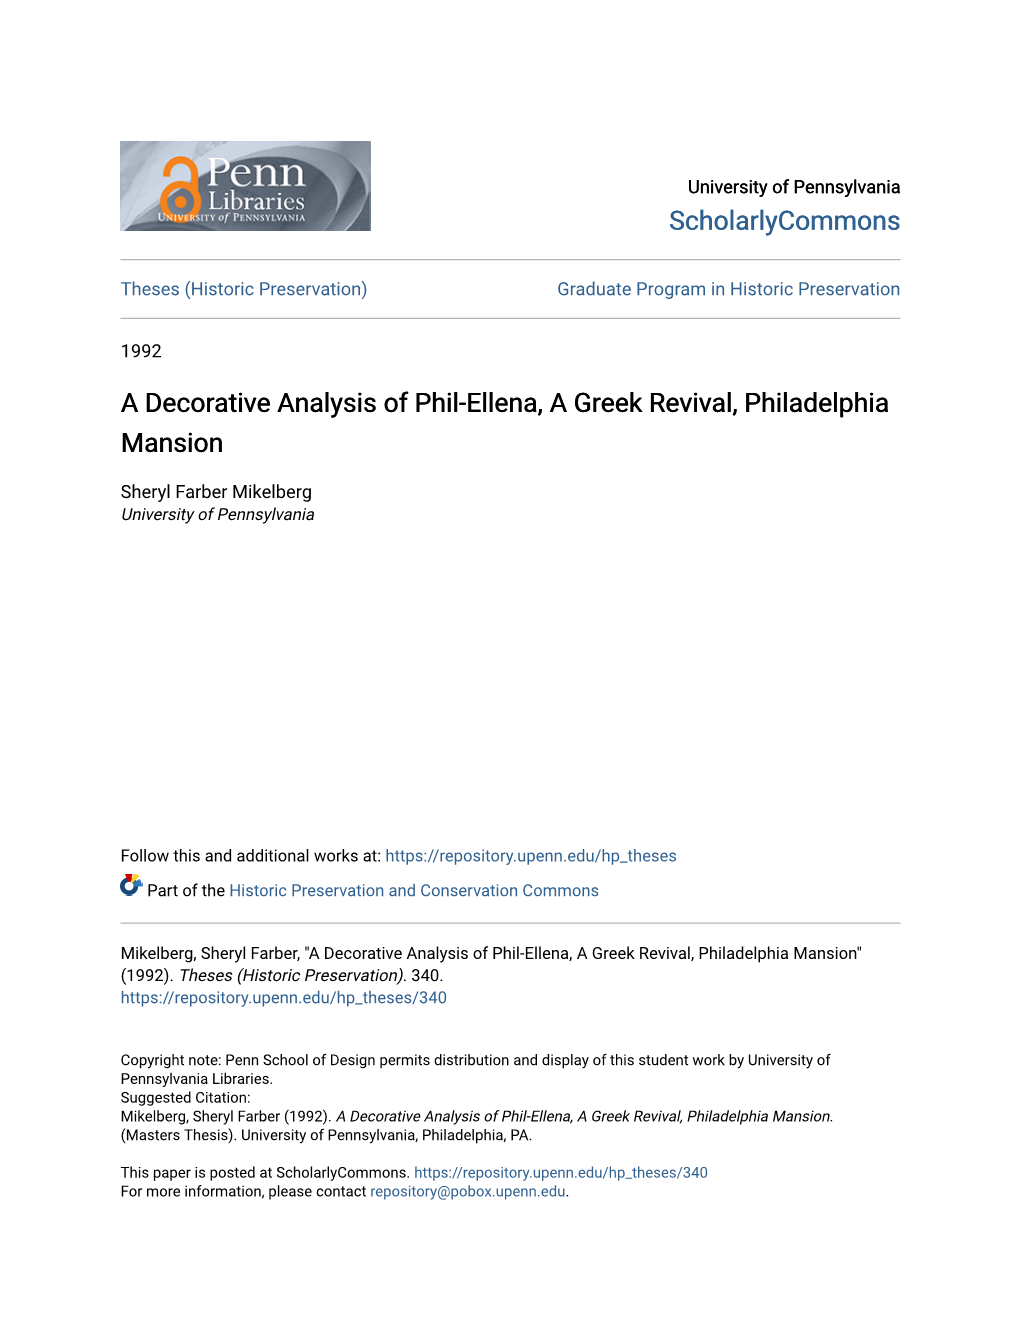 A Decorative Analysis of Phil-Ellena, a Greek Revival, Philadelphia Mansion